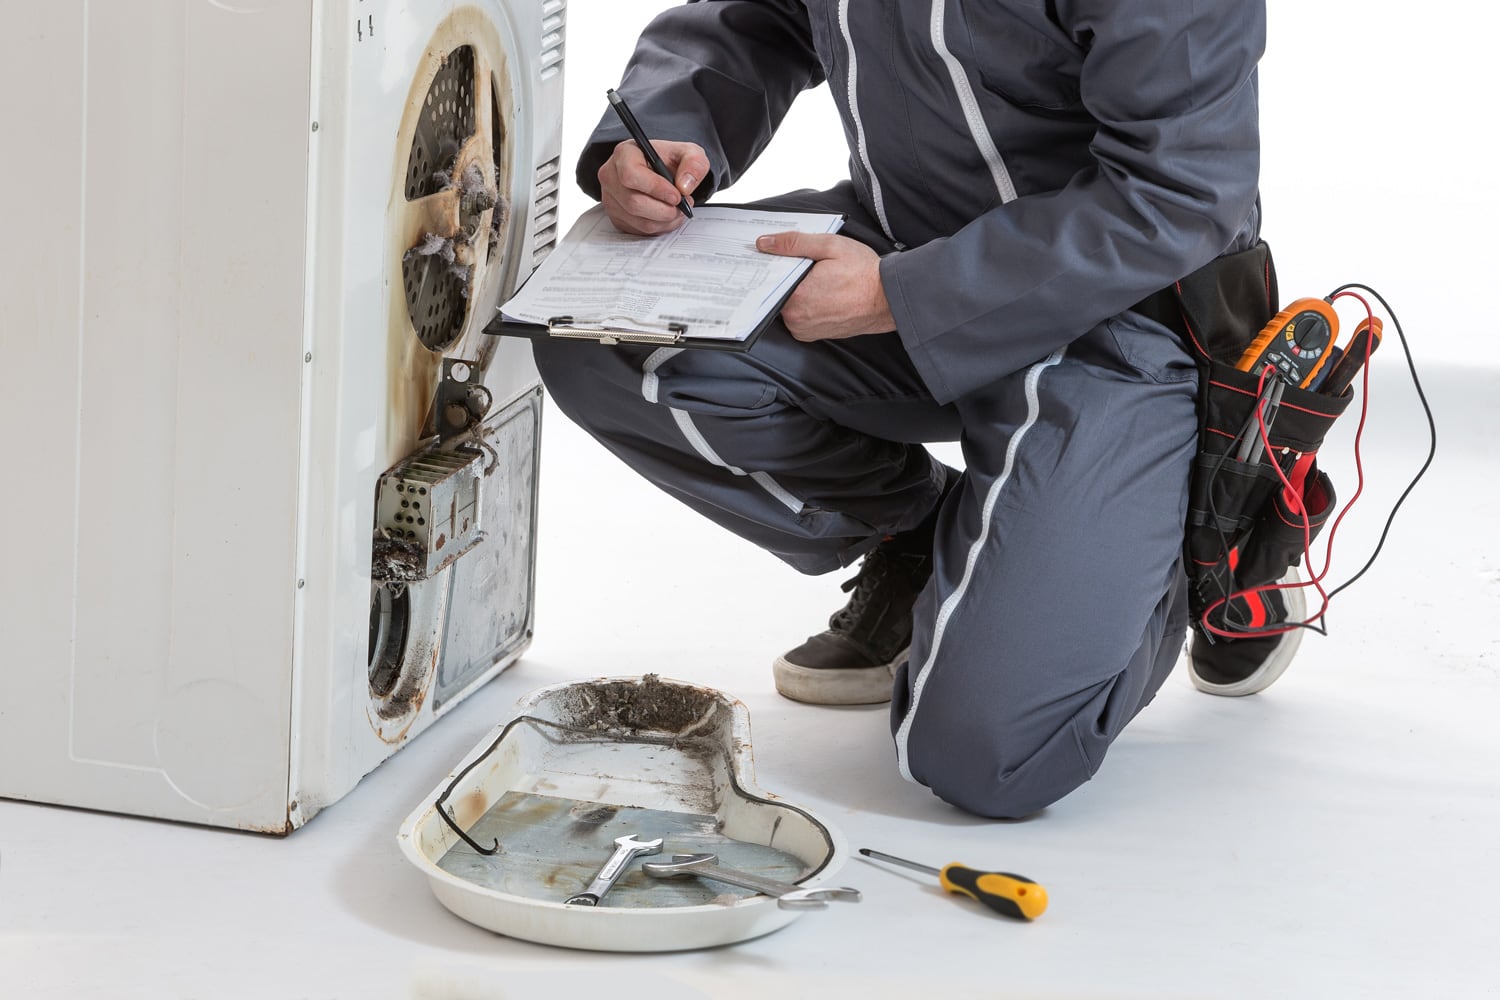 Repairman fixing appliances 